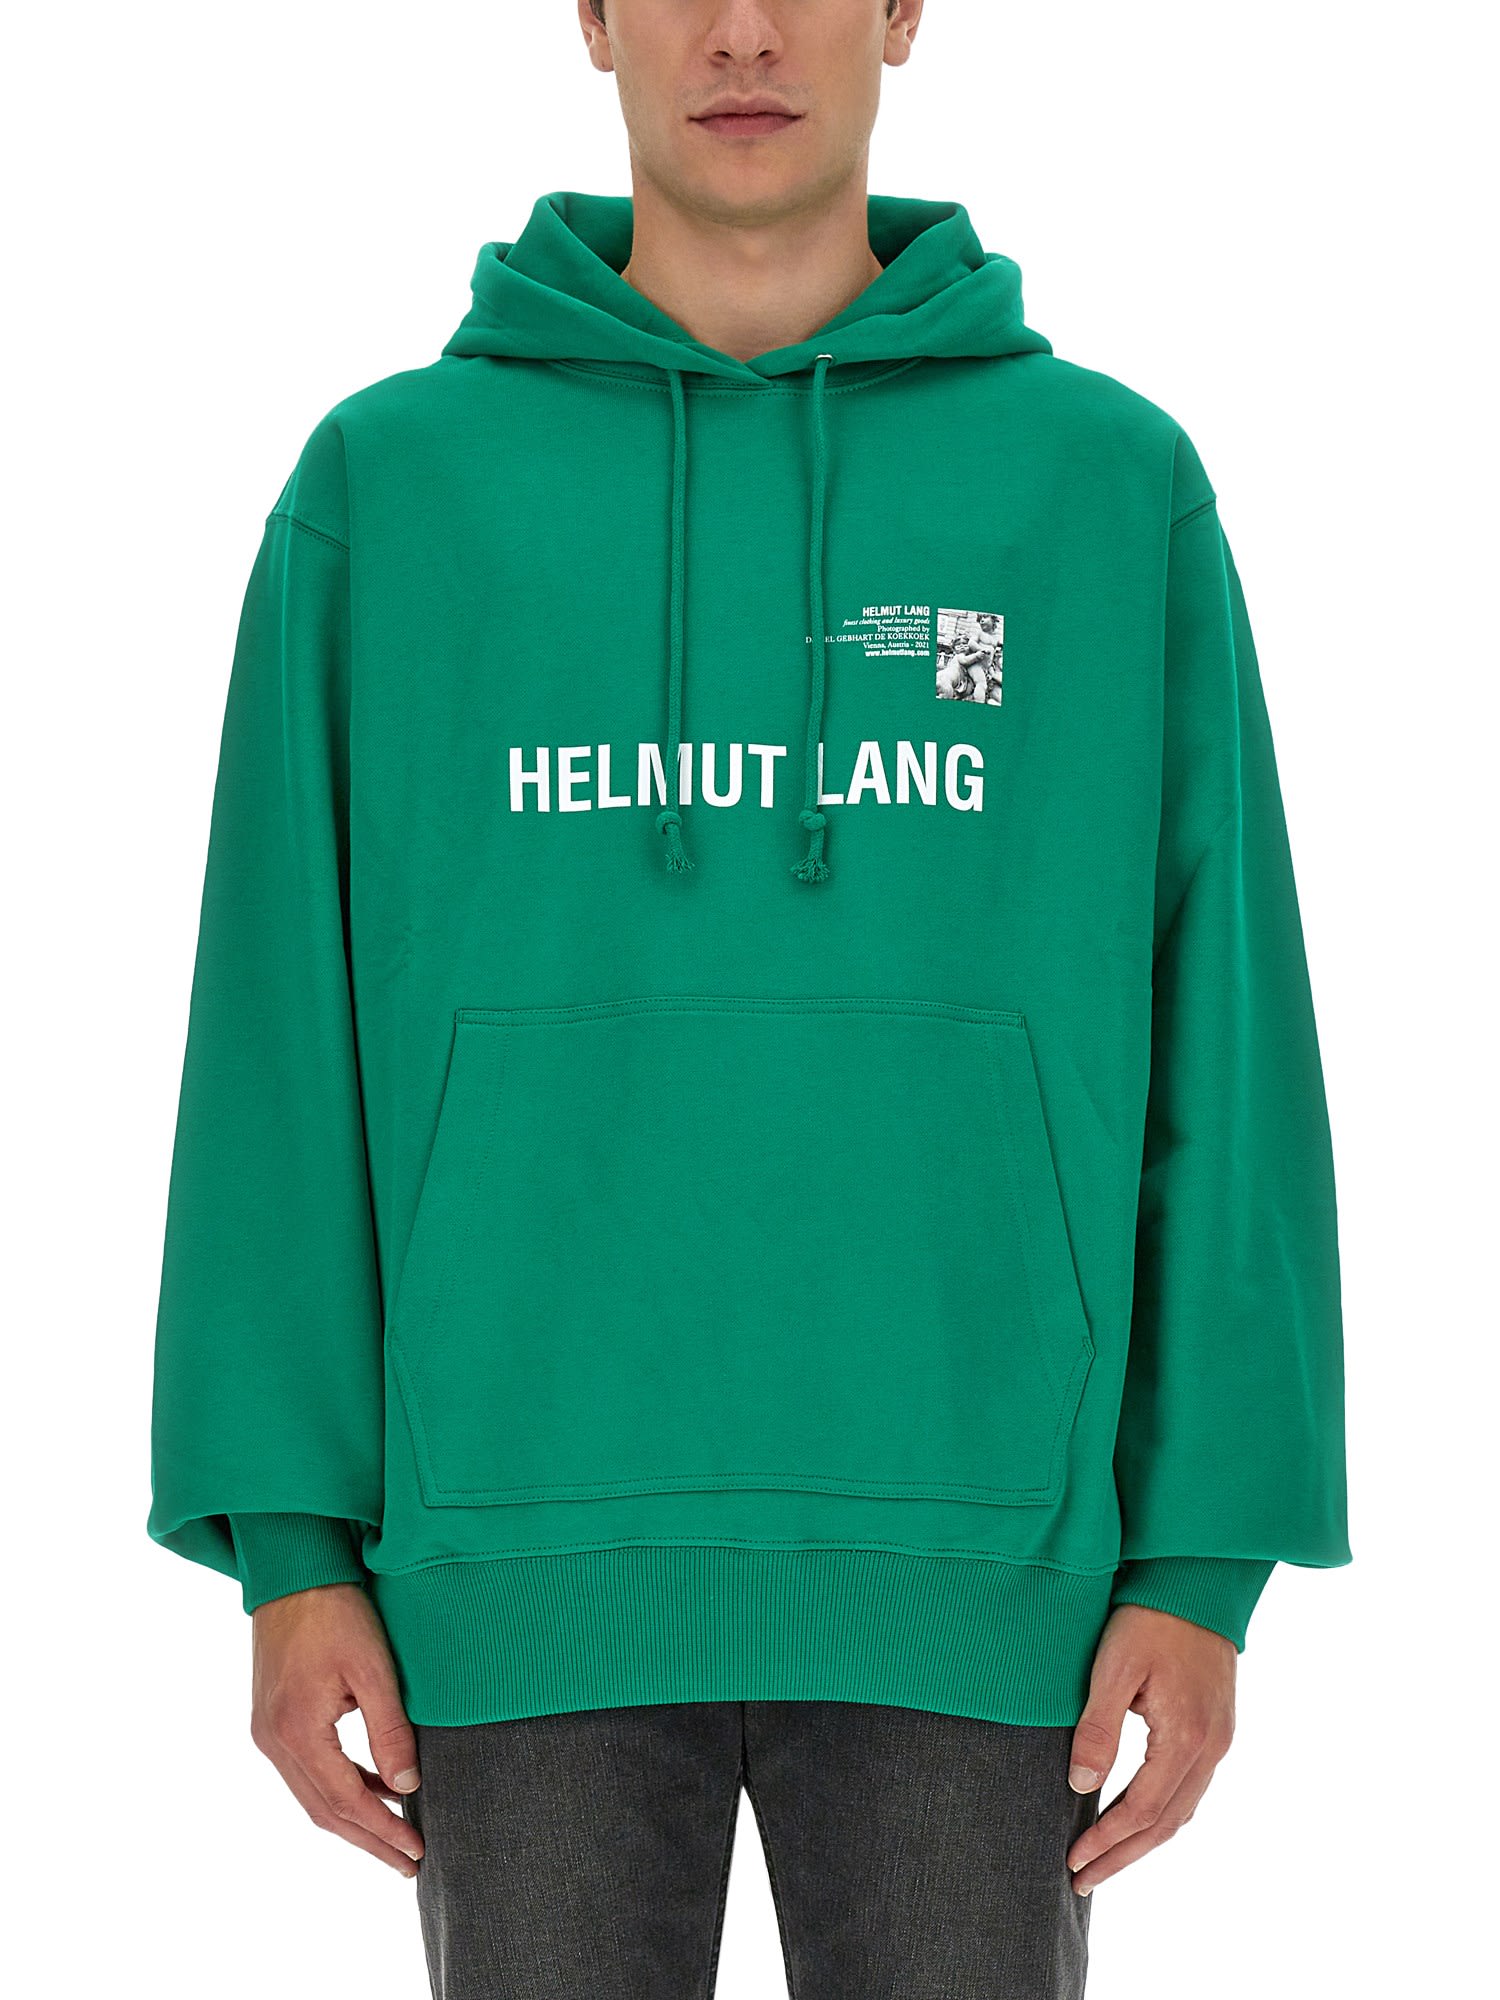 Helmut Lang Sweatshirt vienna